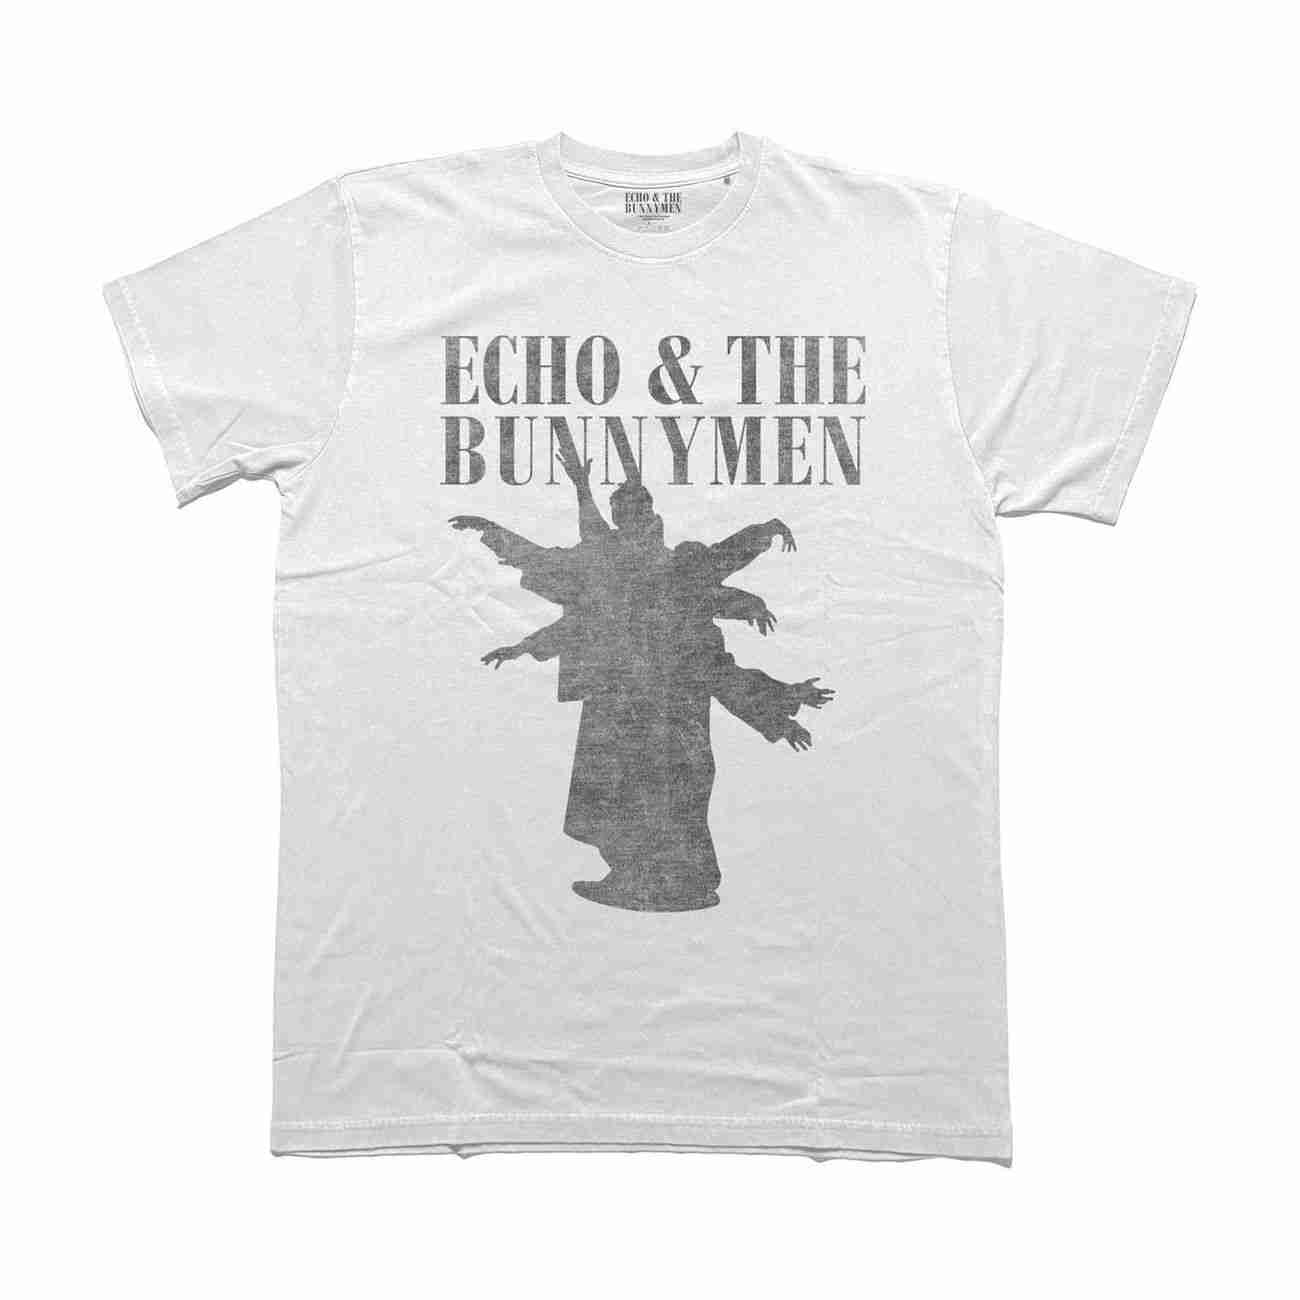 Echo & the bunnymen Tシャツ